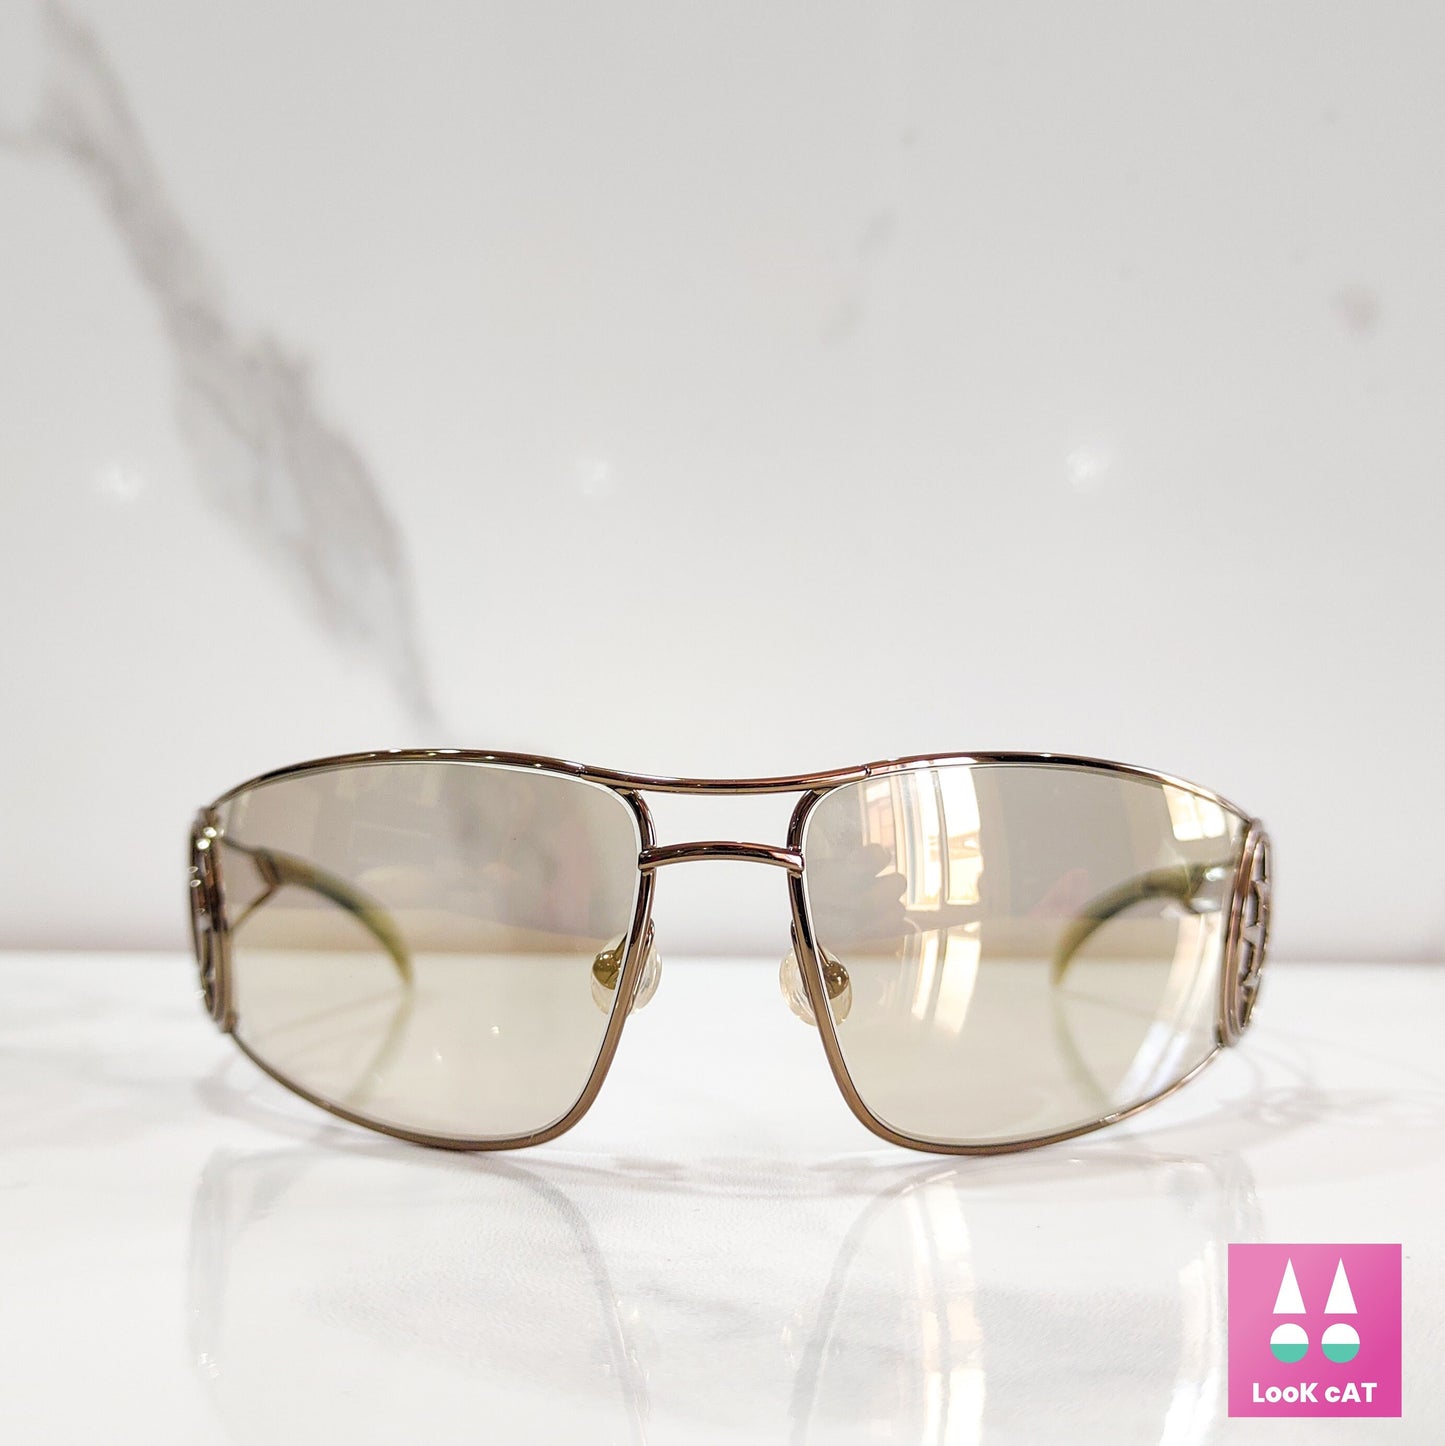 Christian Dior Calandre rari occhiali da sole vintage con scudo avvolgente occhiali gafas y2k Raro